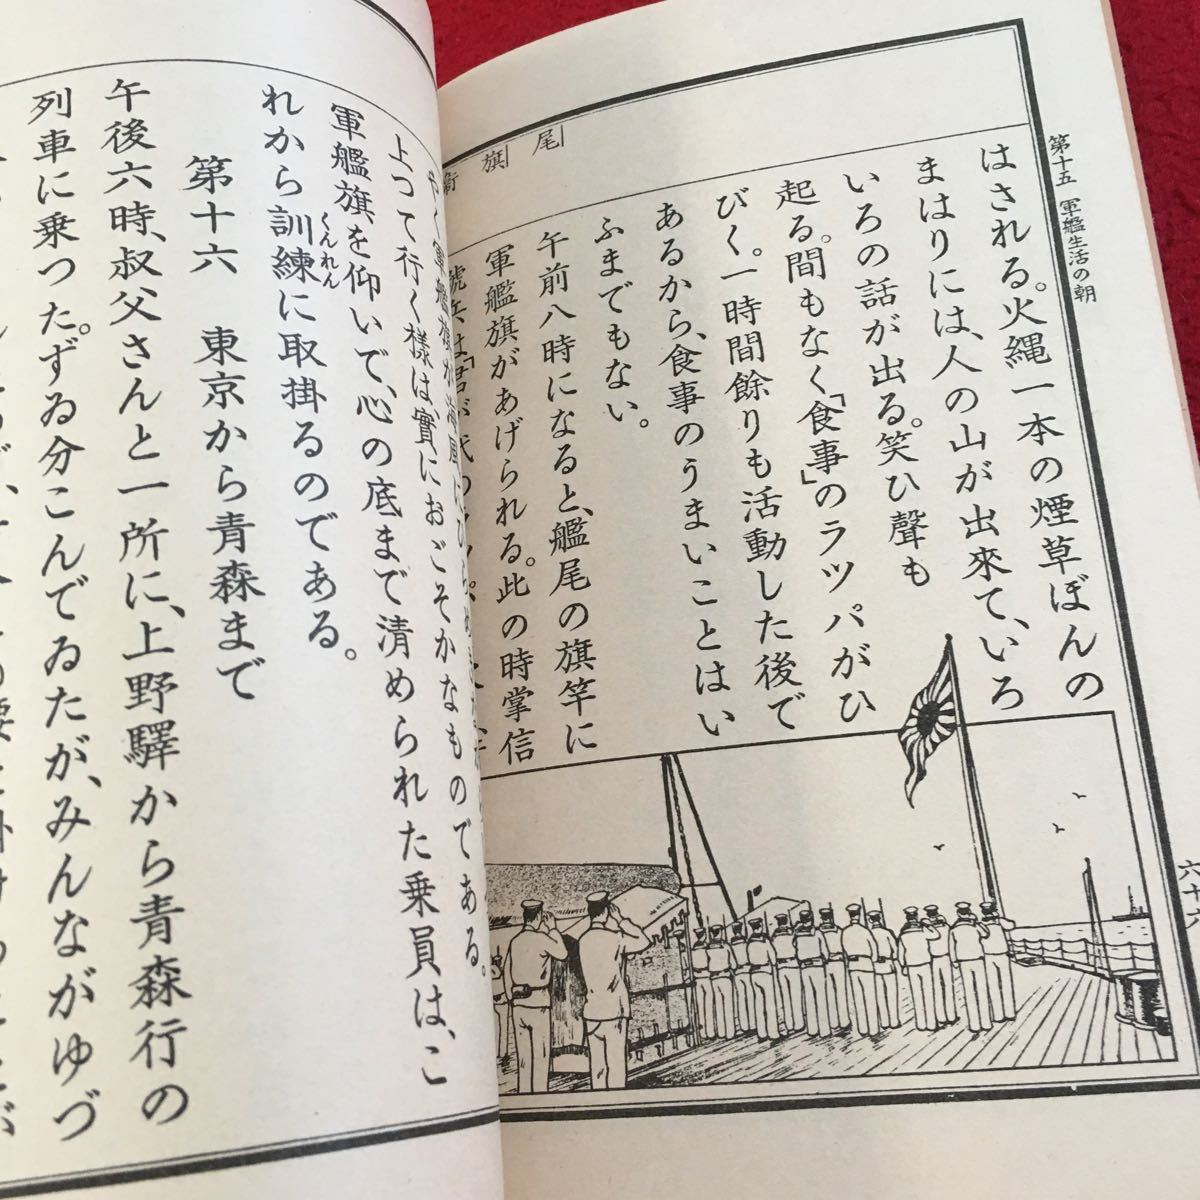 Y35-005.. elementary school national language reader volume 9 writing part . Showa era 10 year issue Osaka publication now day truck island flight .naiyagala. .. leaf. mountain road .... etc. 